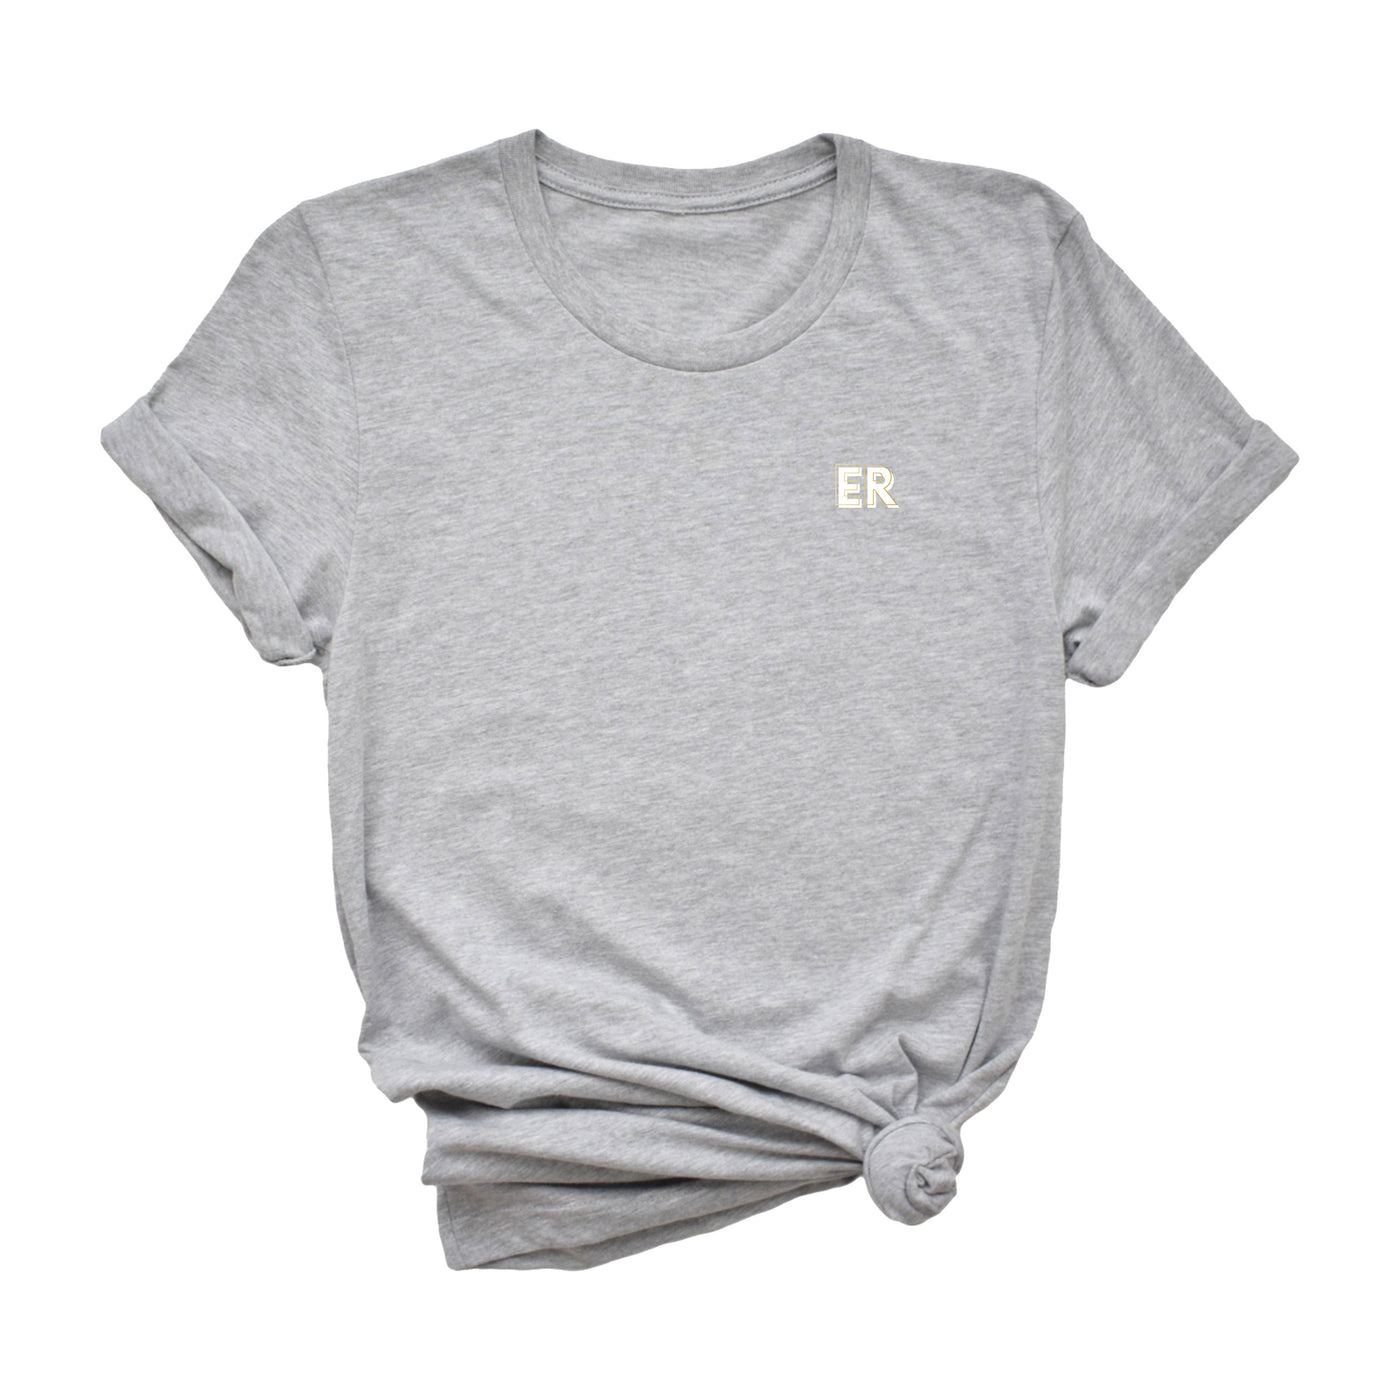 ER Creds - Shirt